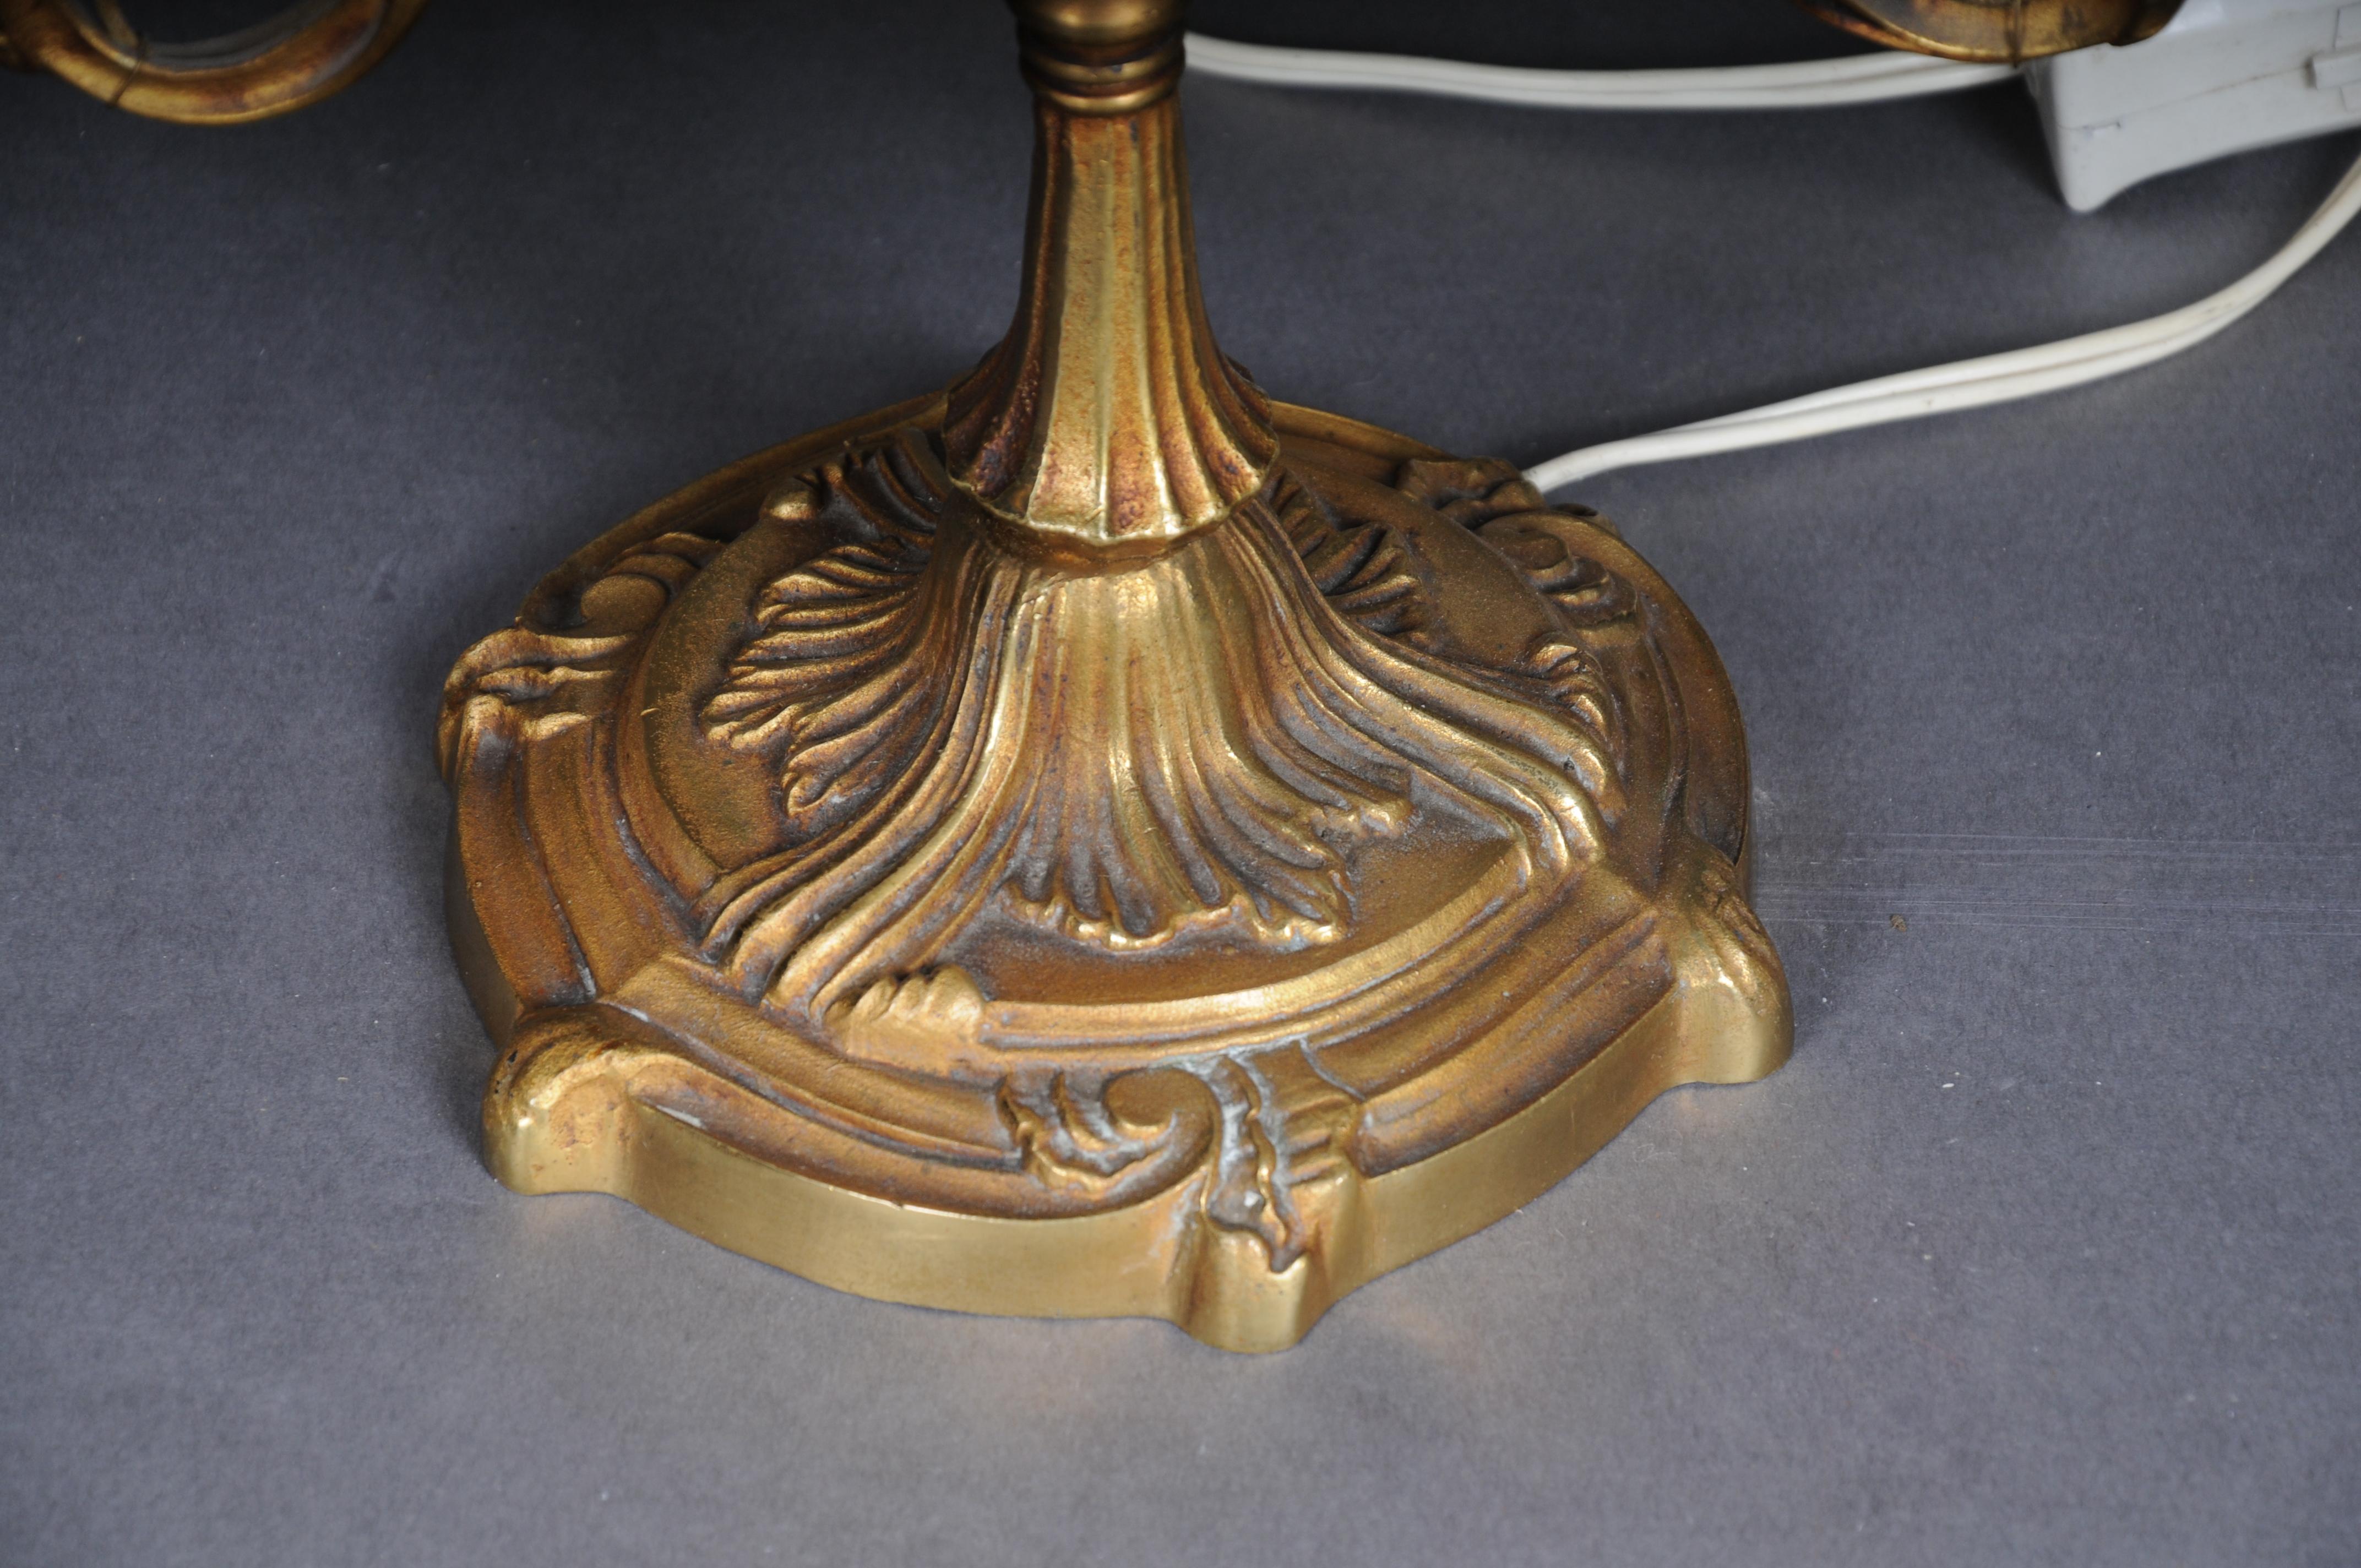 Antique Desk Lamp / Table Lamp Empire circa 1900, Gold-Plated Bronze In Good Condition For Sale In Berlin, DE